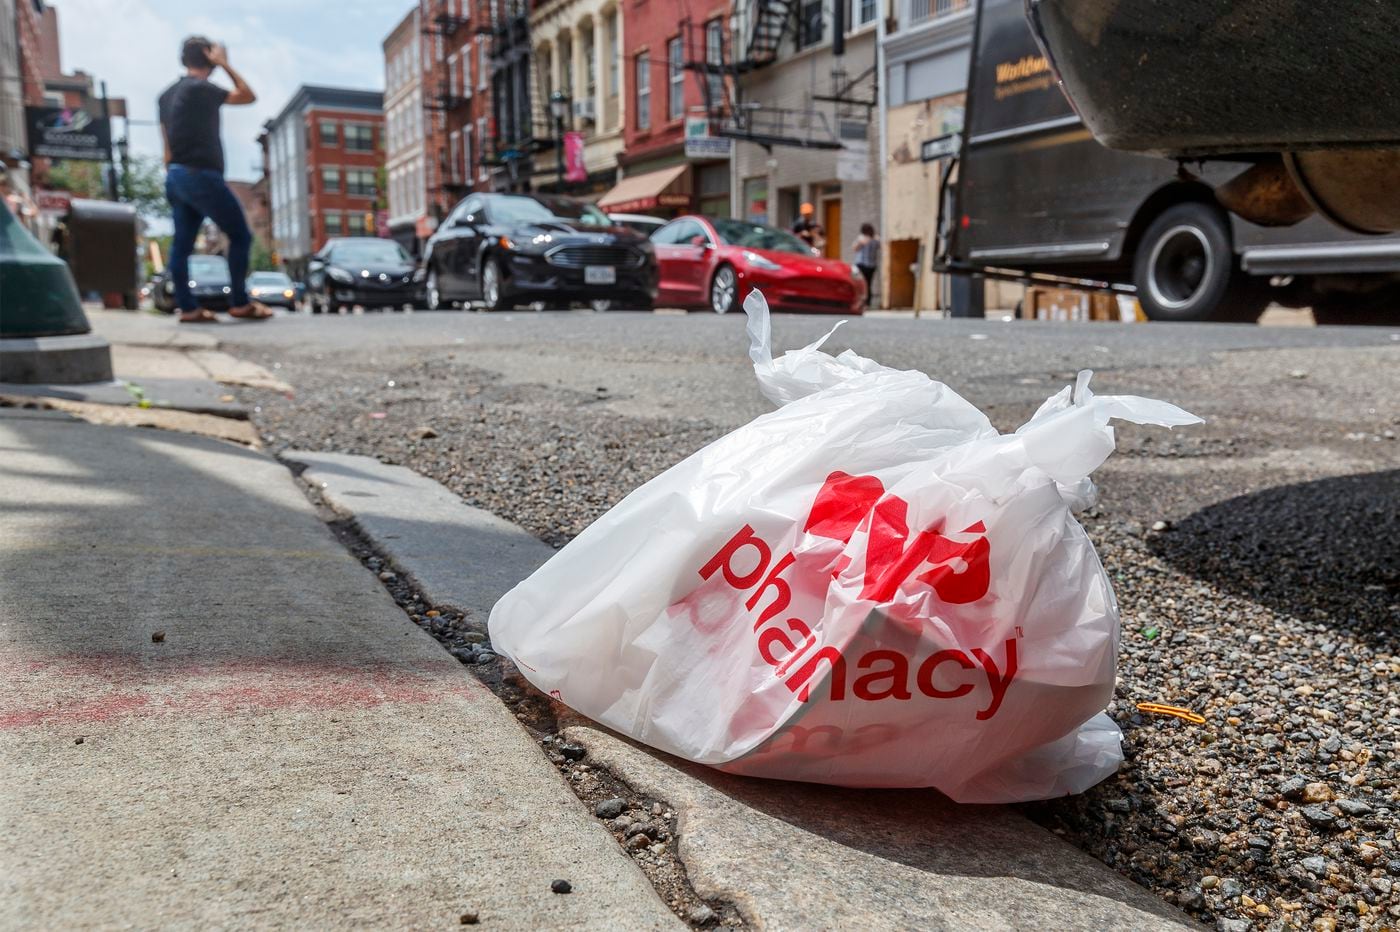 Should Pennsylvania push to ban plastic bags? Pro/Con